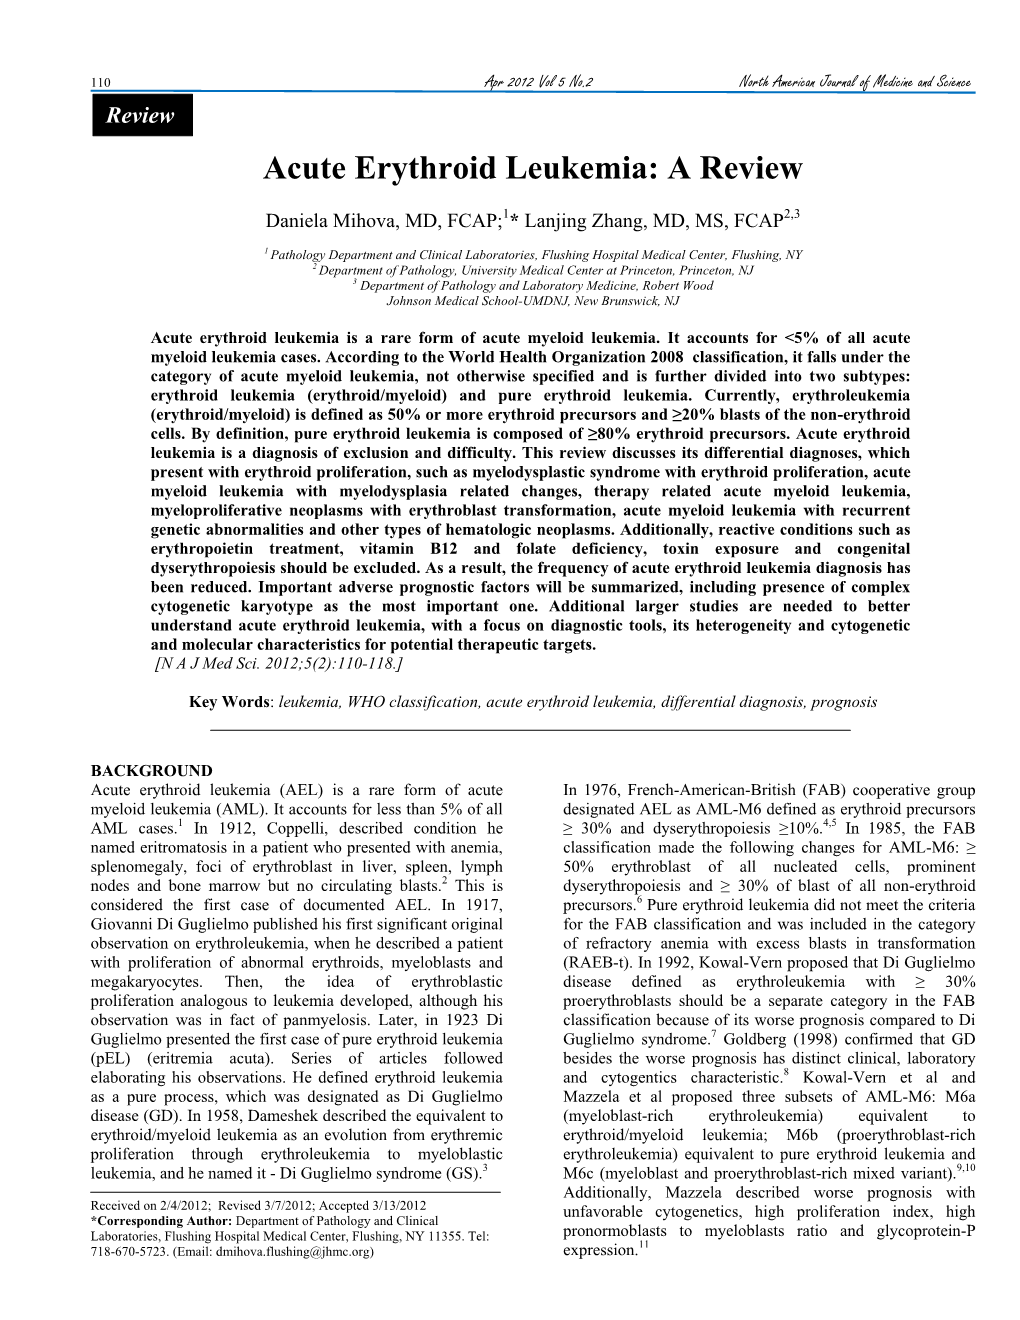 Acute Erythroid Leukemia: a Review